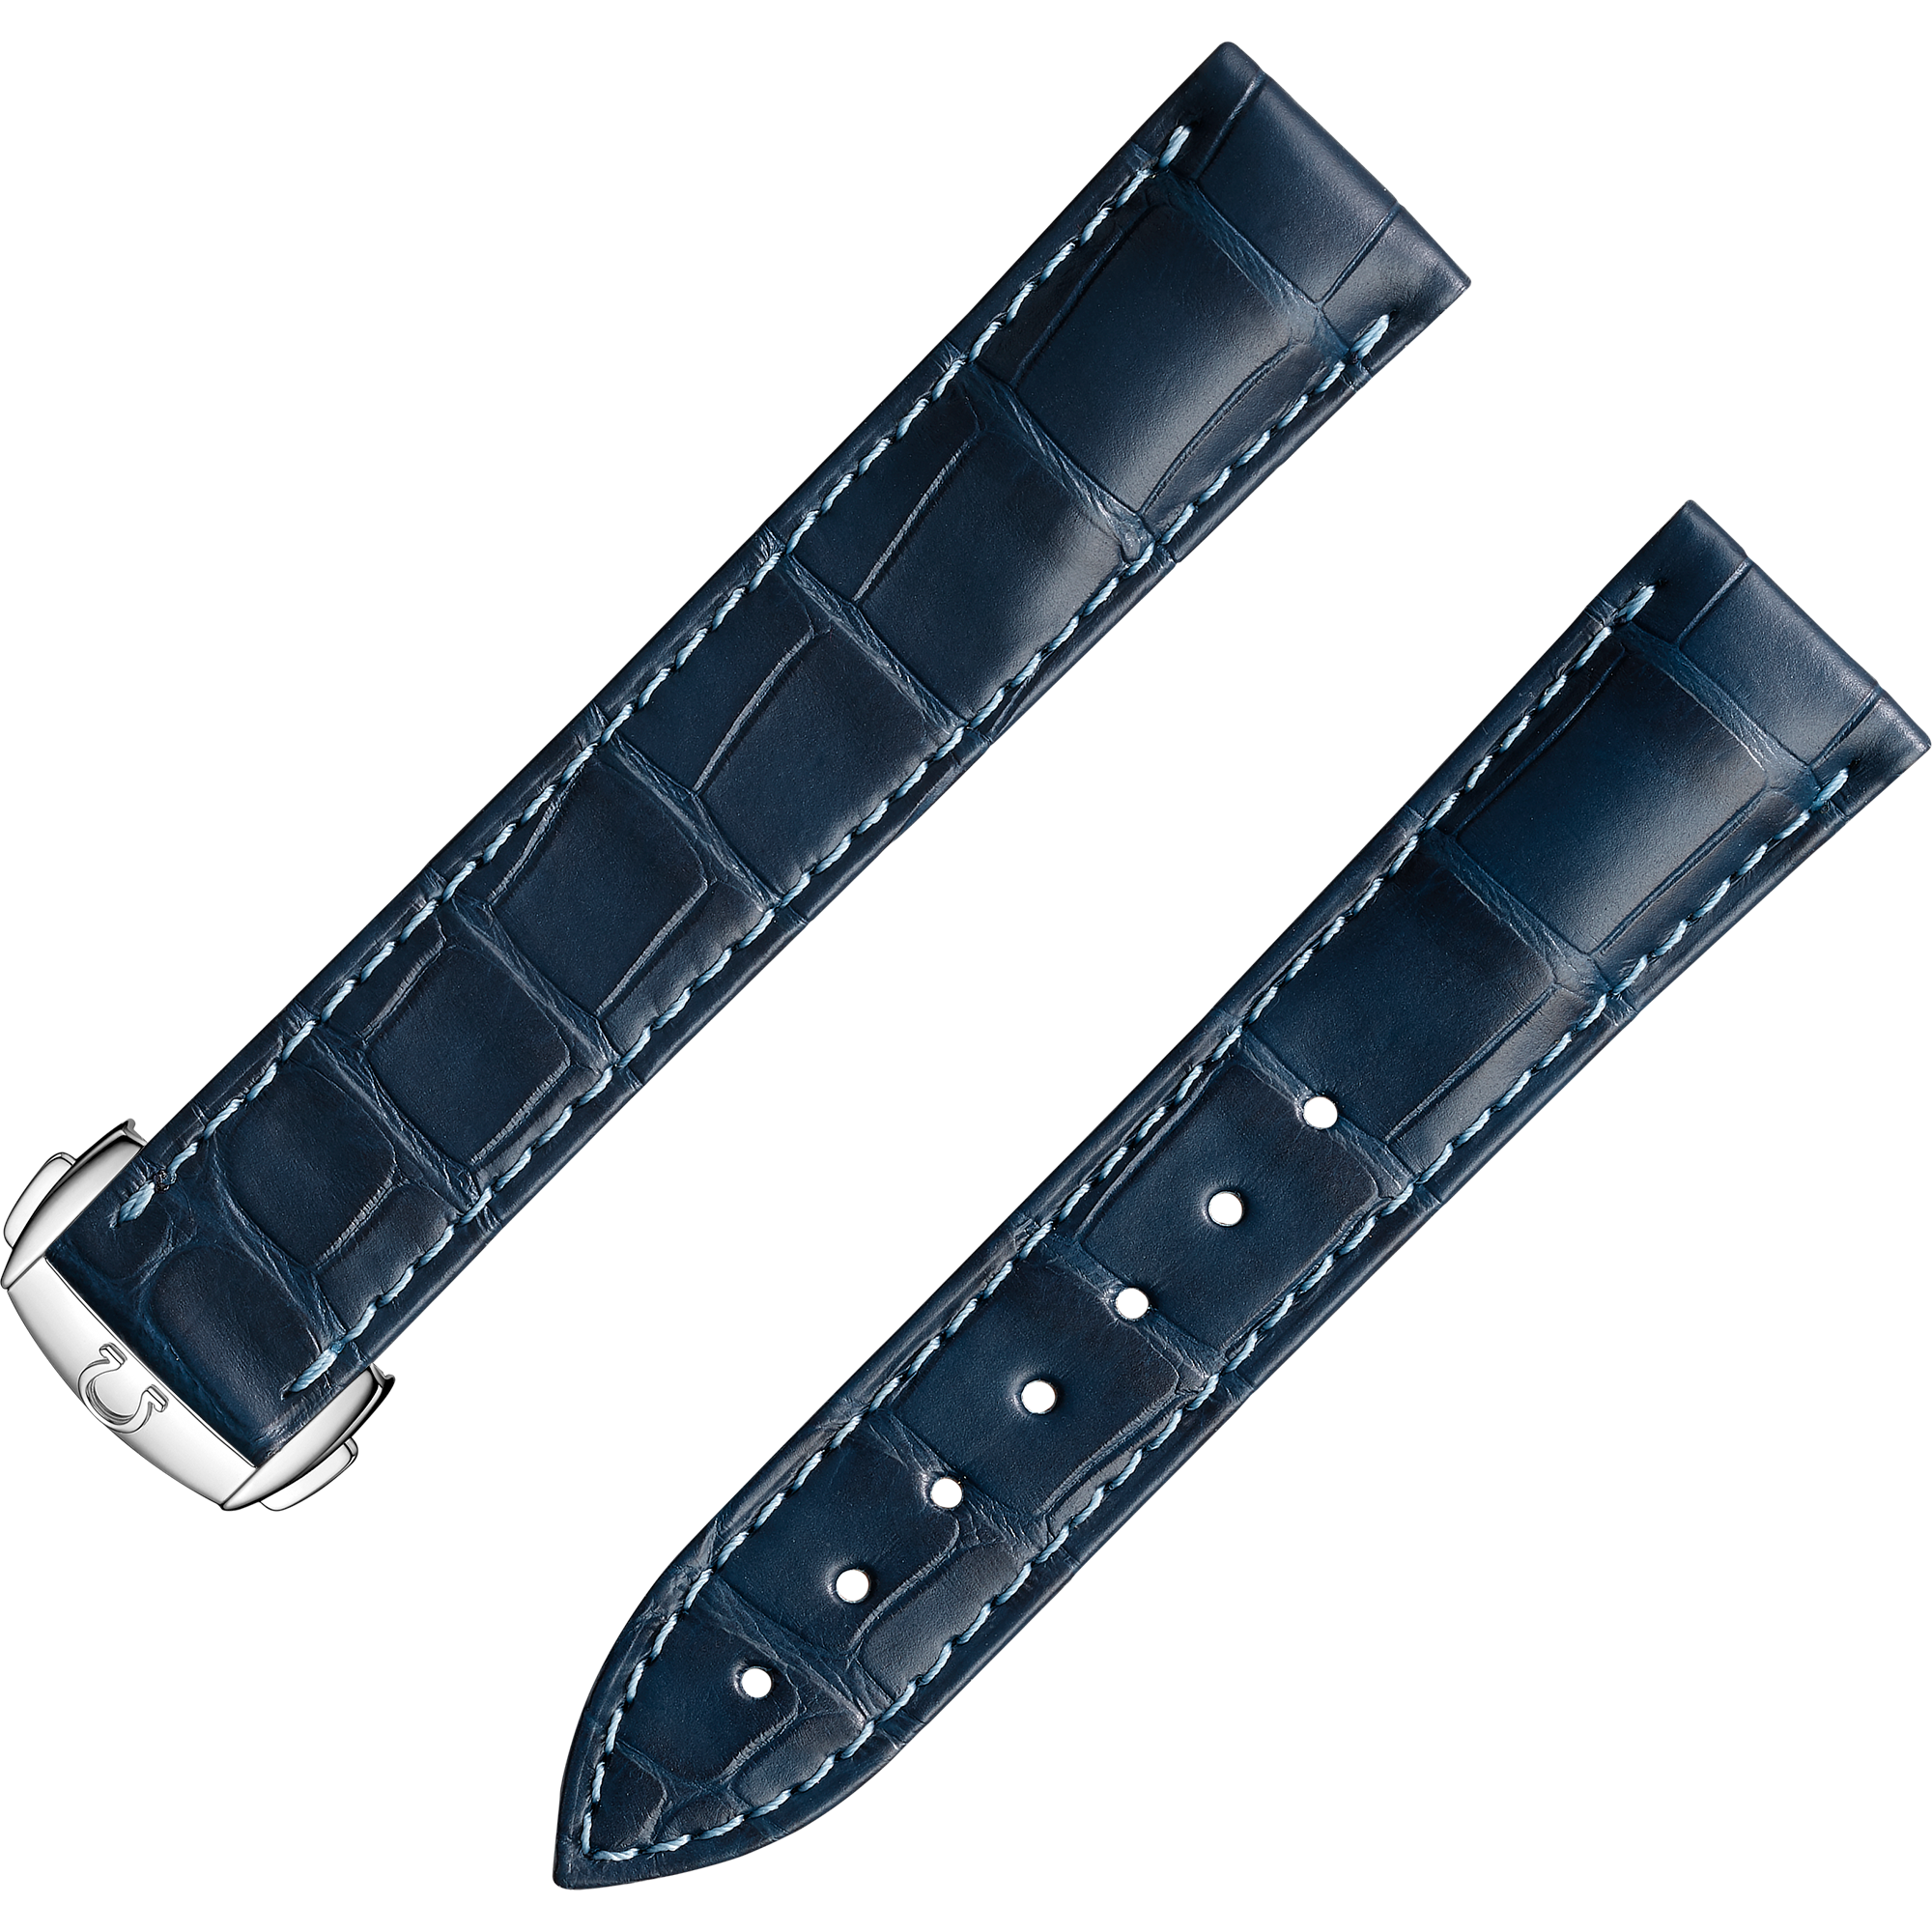 Two-piece strap - Blue alligator leather strap with foldover clasp - 032CUZ007419W